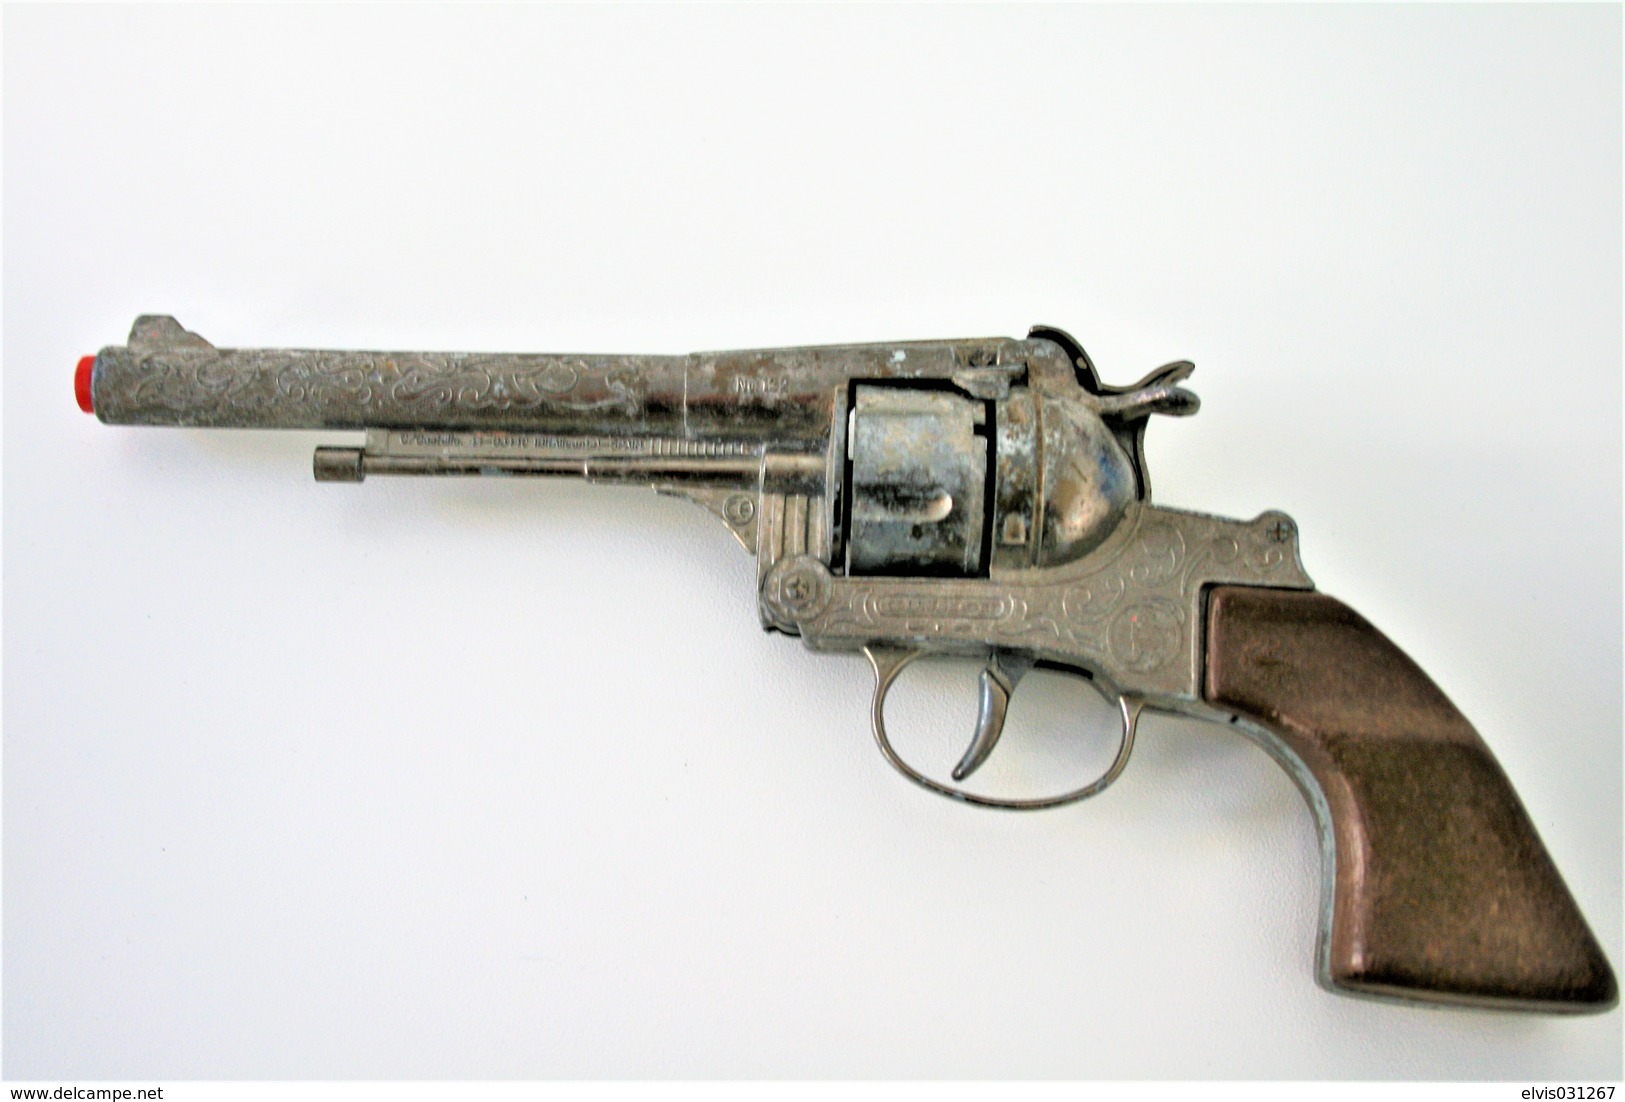 Vintage TOY GUN : GONHER NO. 122 - L=24.5cm - 19??s - Spain - Keywords : Cap Gun - Cork Gun - Rifle - Revolver - Pistol - Decotatieve Wapens